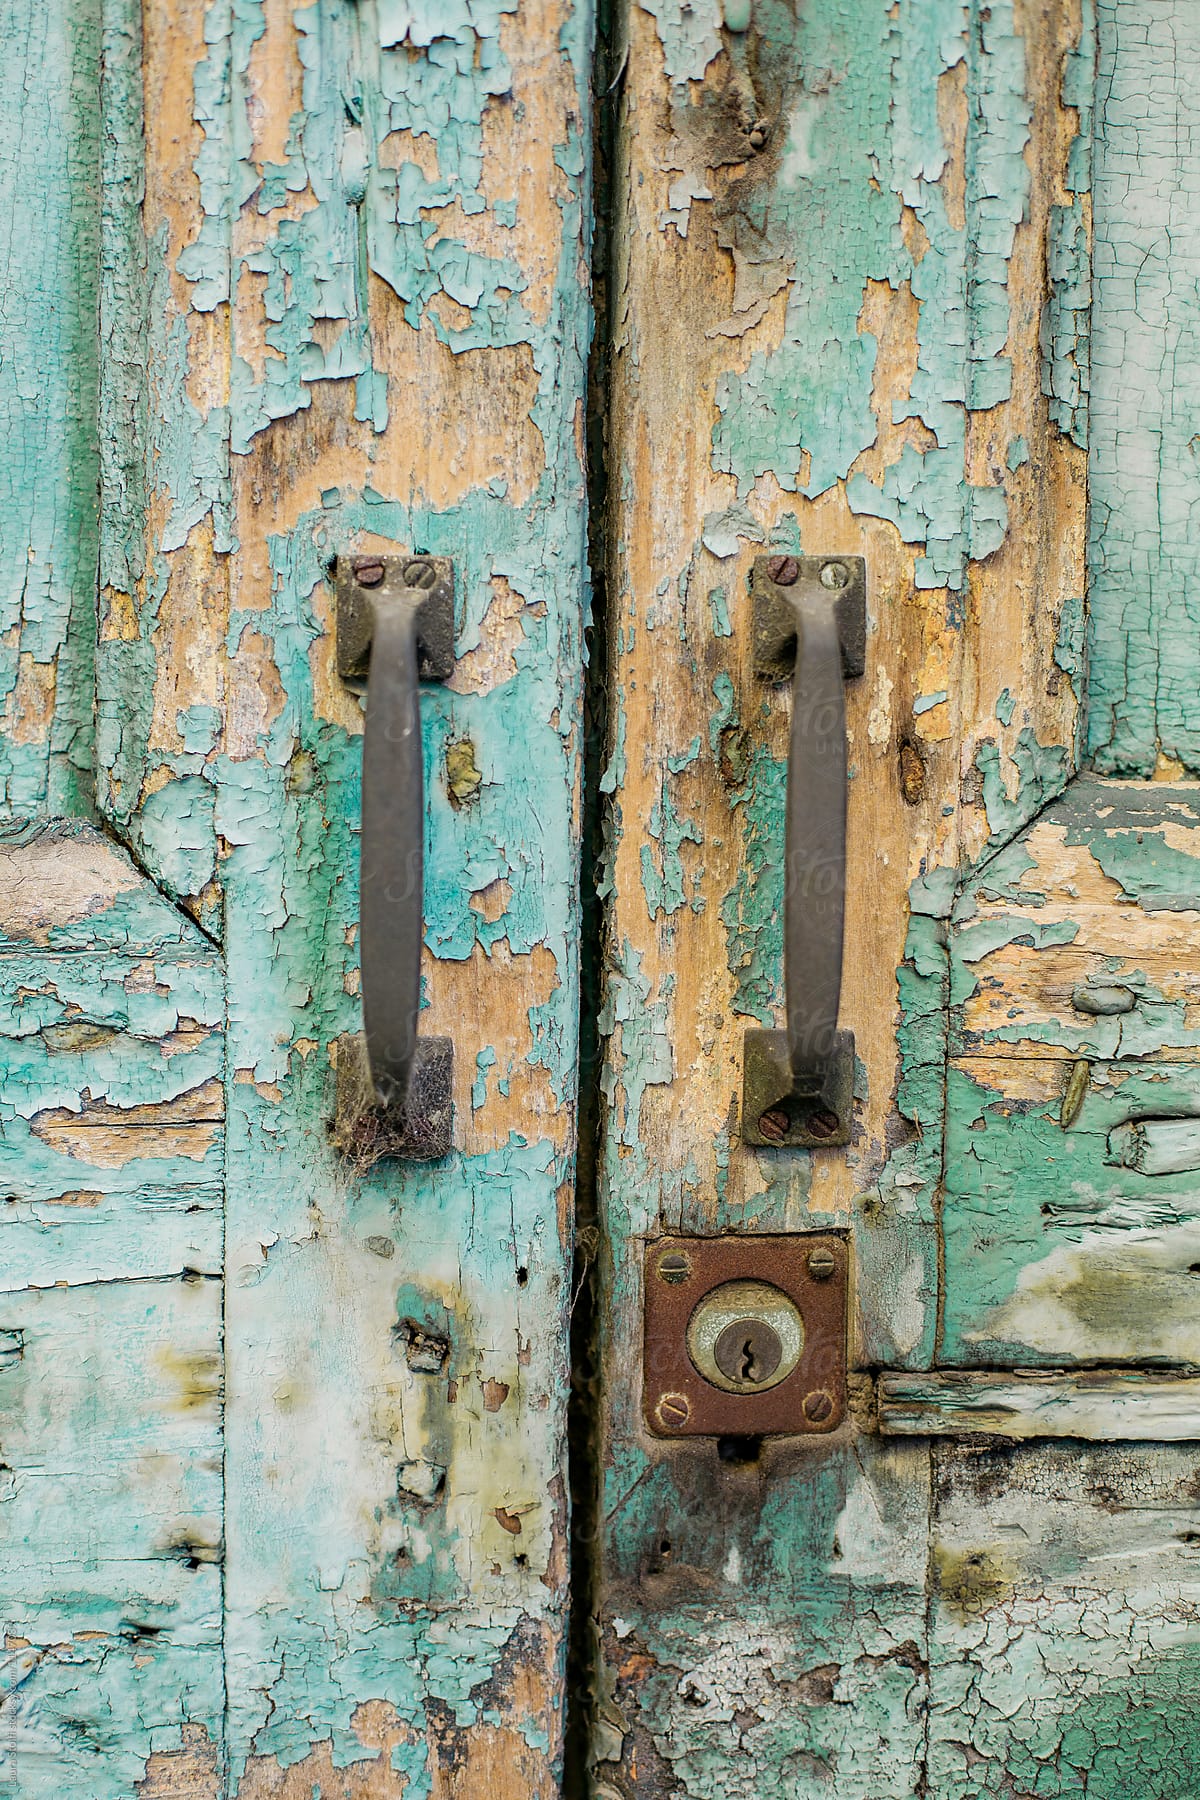 Rusty lock and grips on ruined blue wooden door